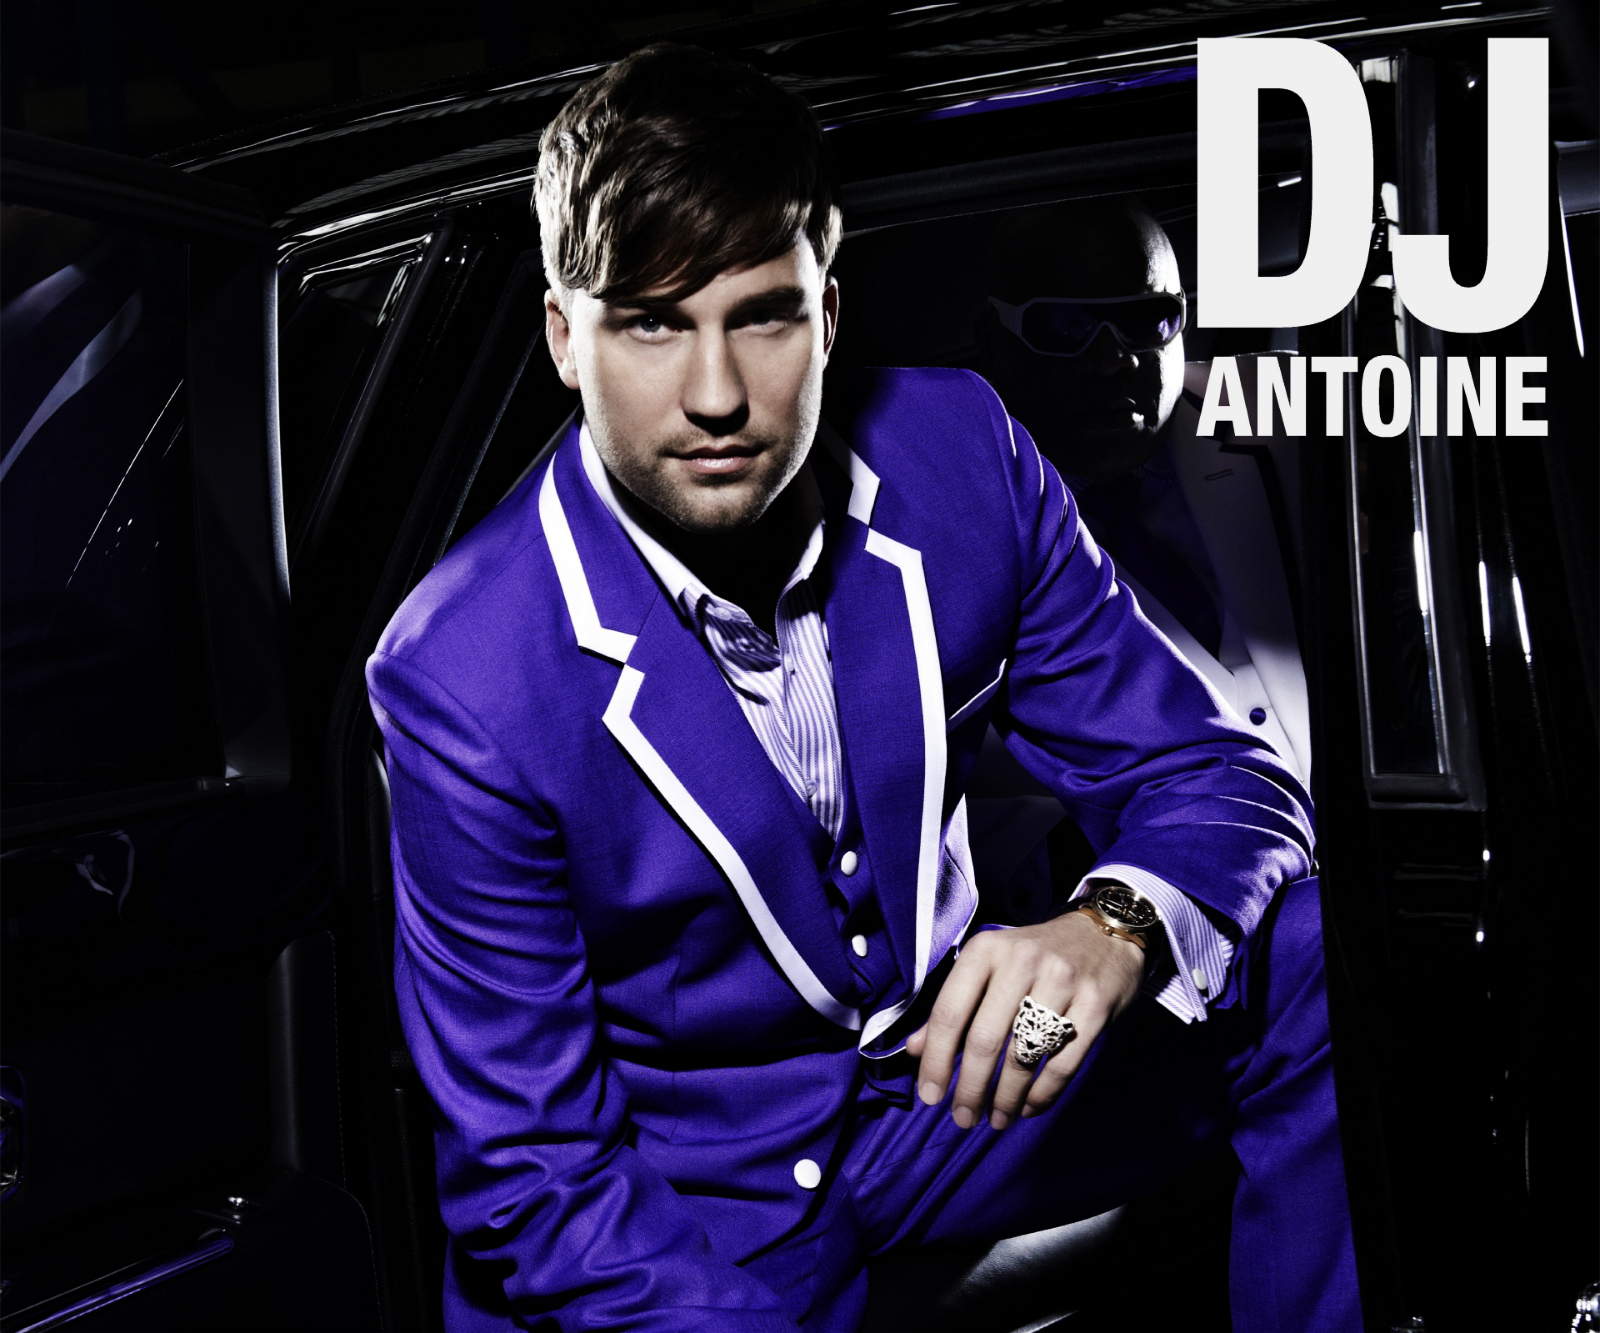 DJ Antoine Album Covers HD Wallpapers | HD Wallpapers